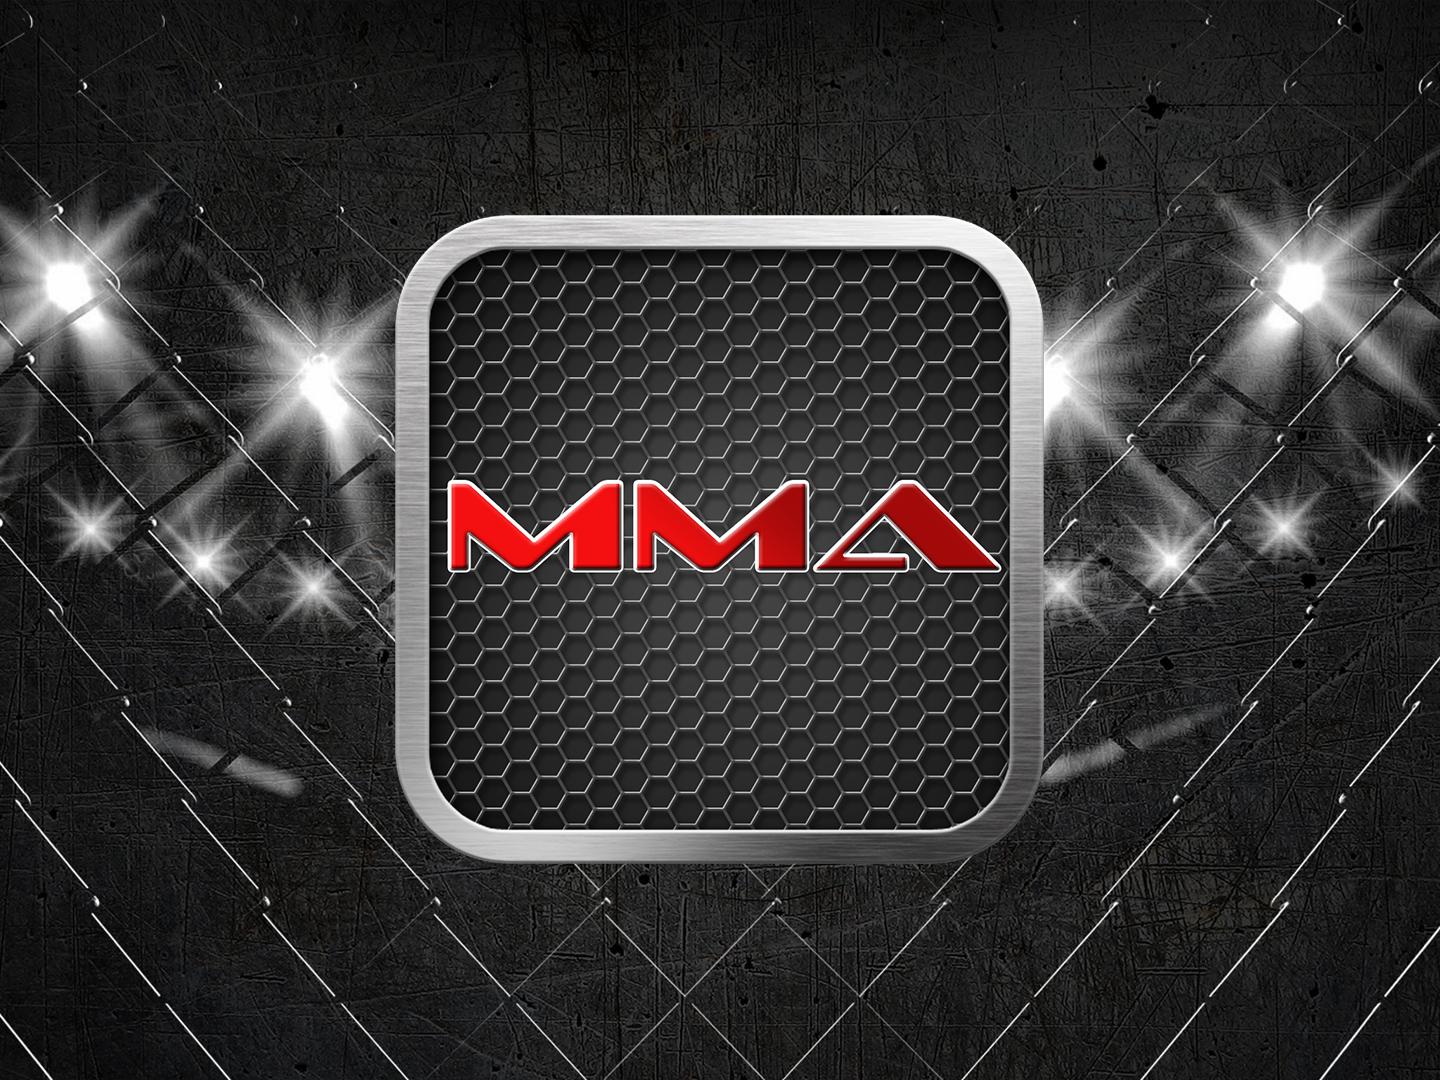 MMA TV